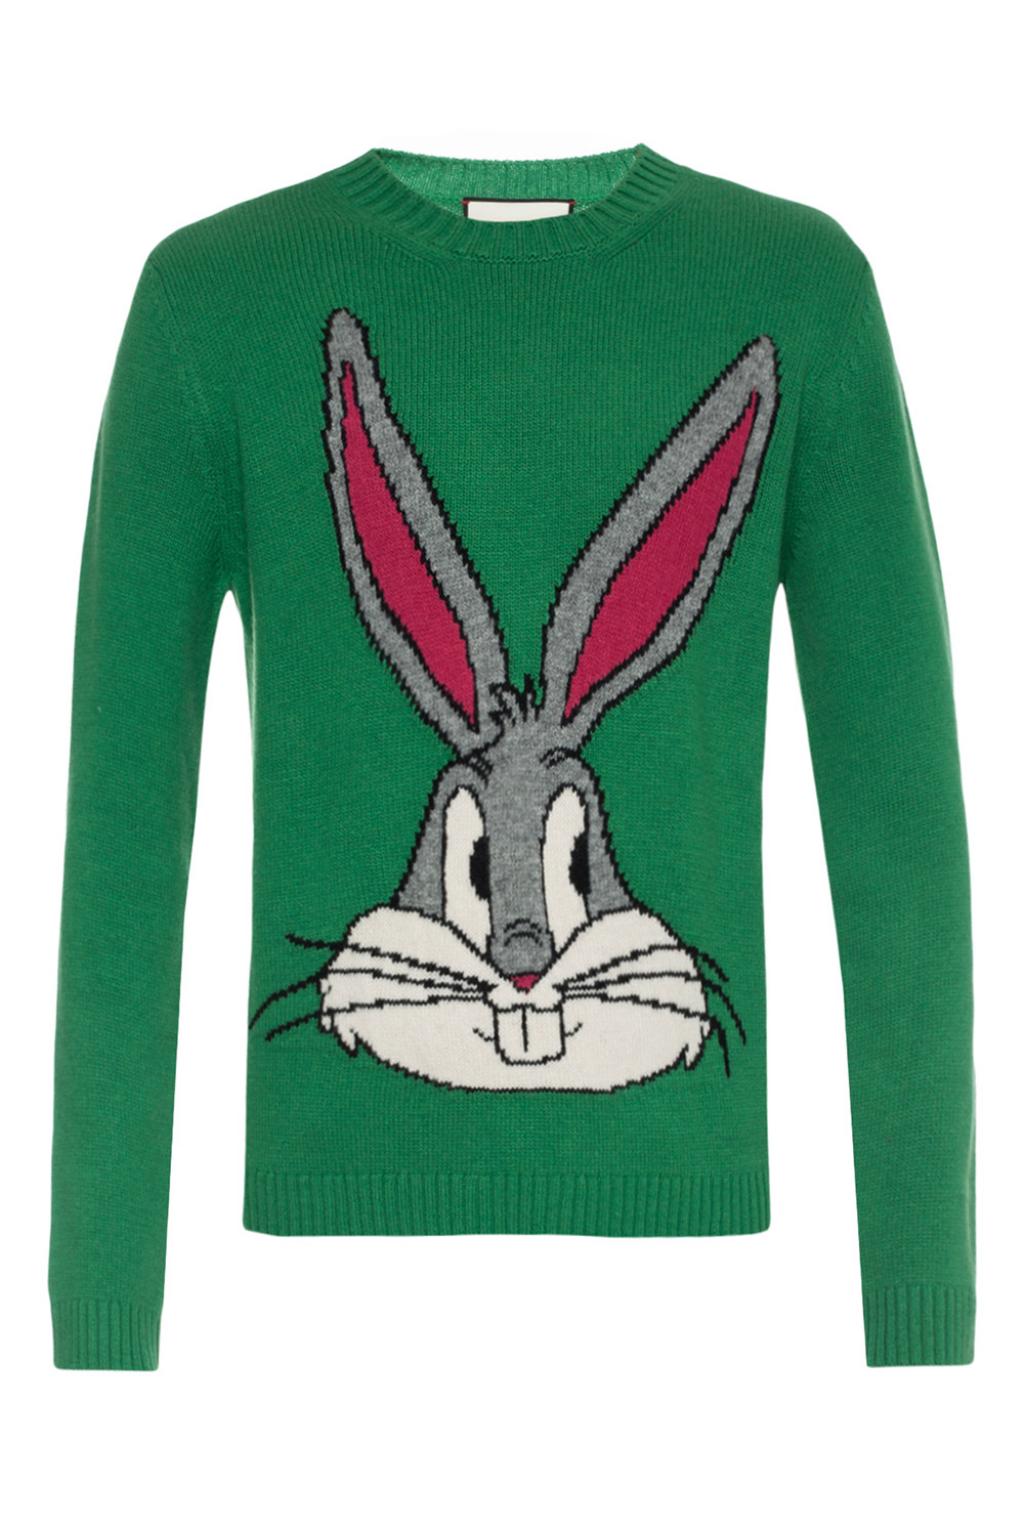 Bugs Bunny' sweater Gucci - Vitkac France